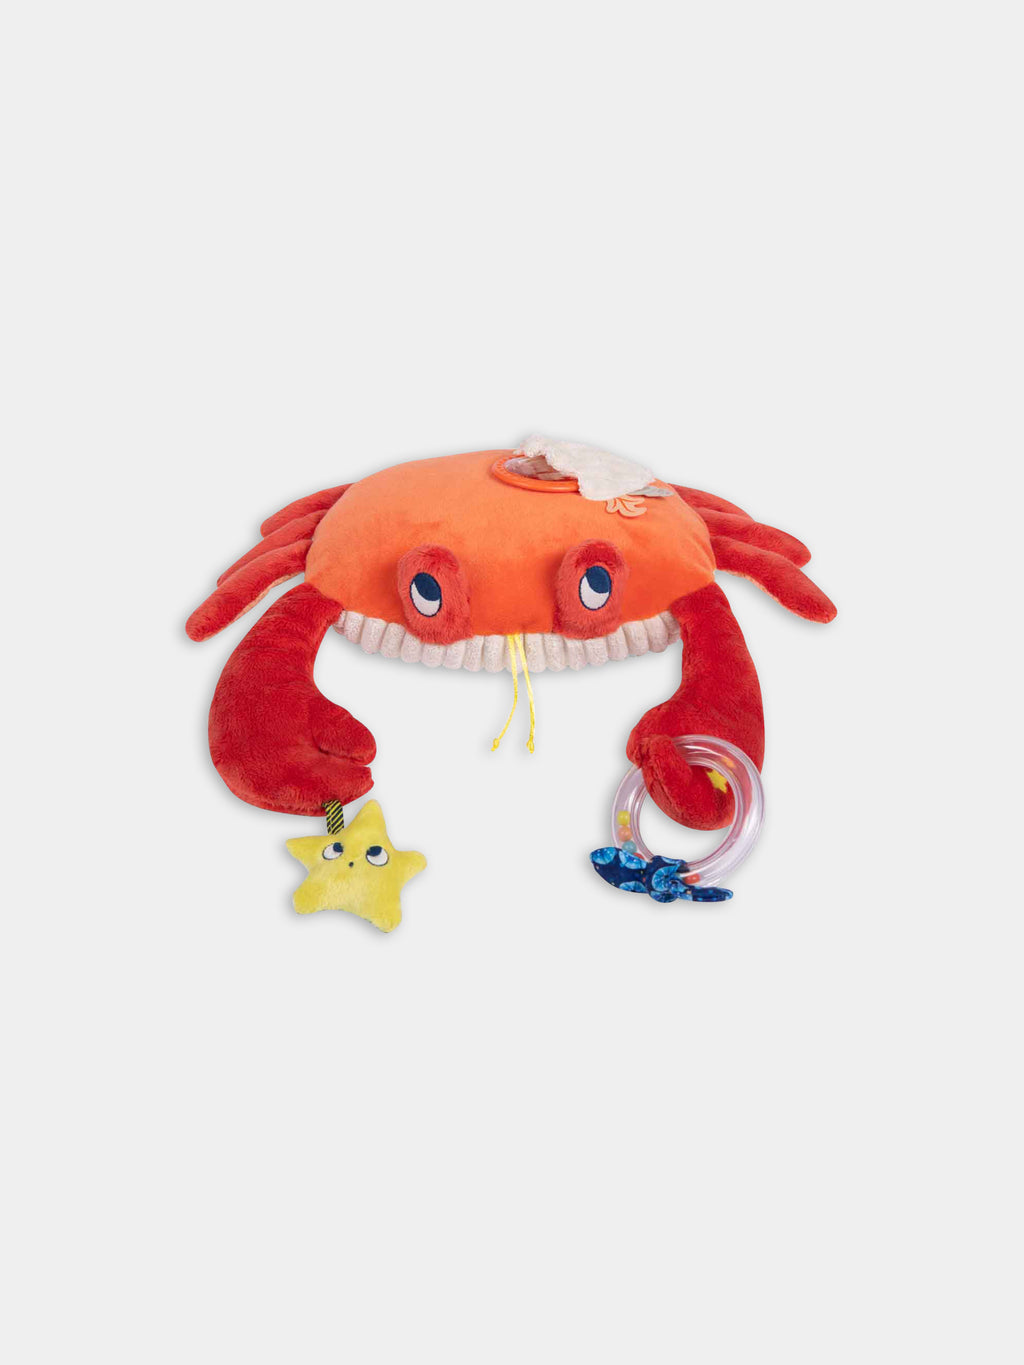 Orange crab-shaped soft toy for kids